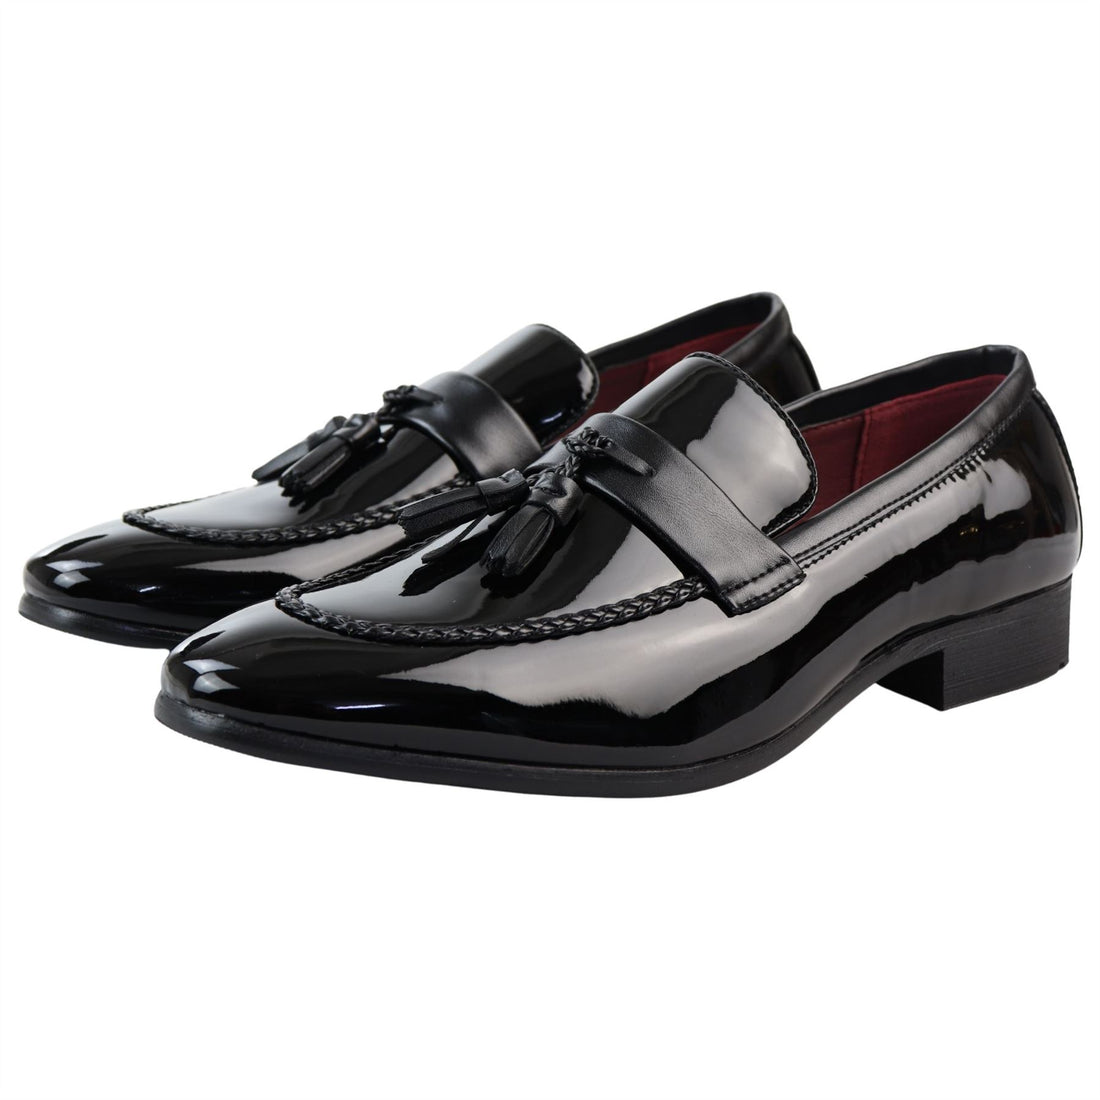 Men's Moccasin Loafers Patent Leather Lined Slip On Tassel Formal Dress Shoes